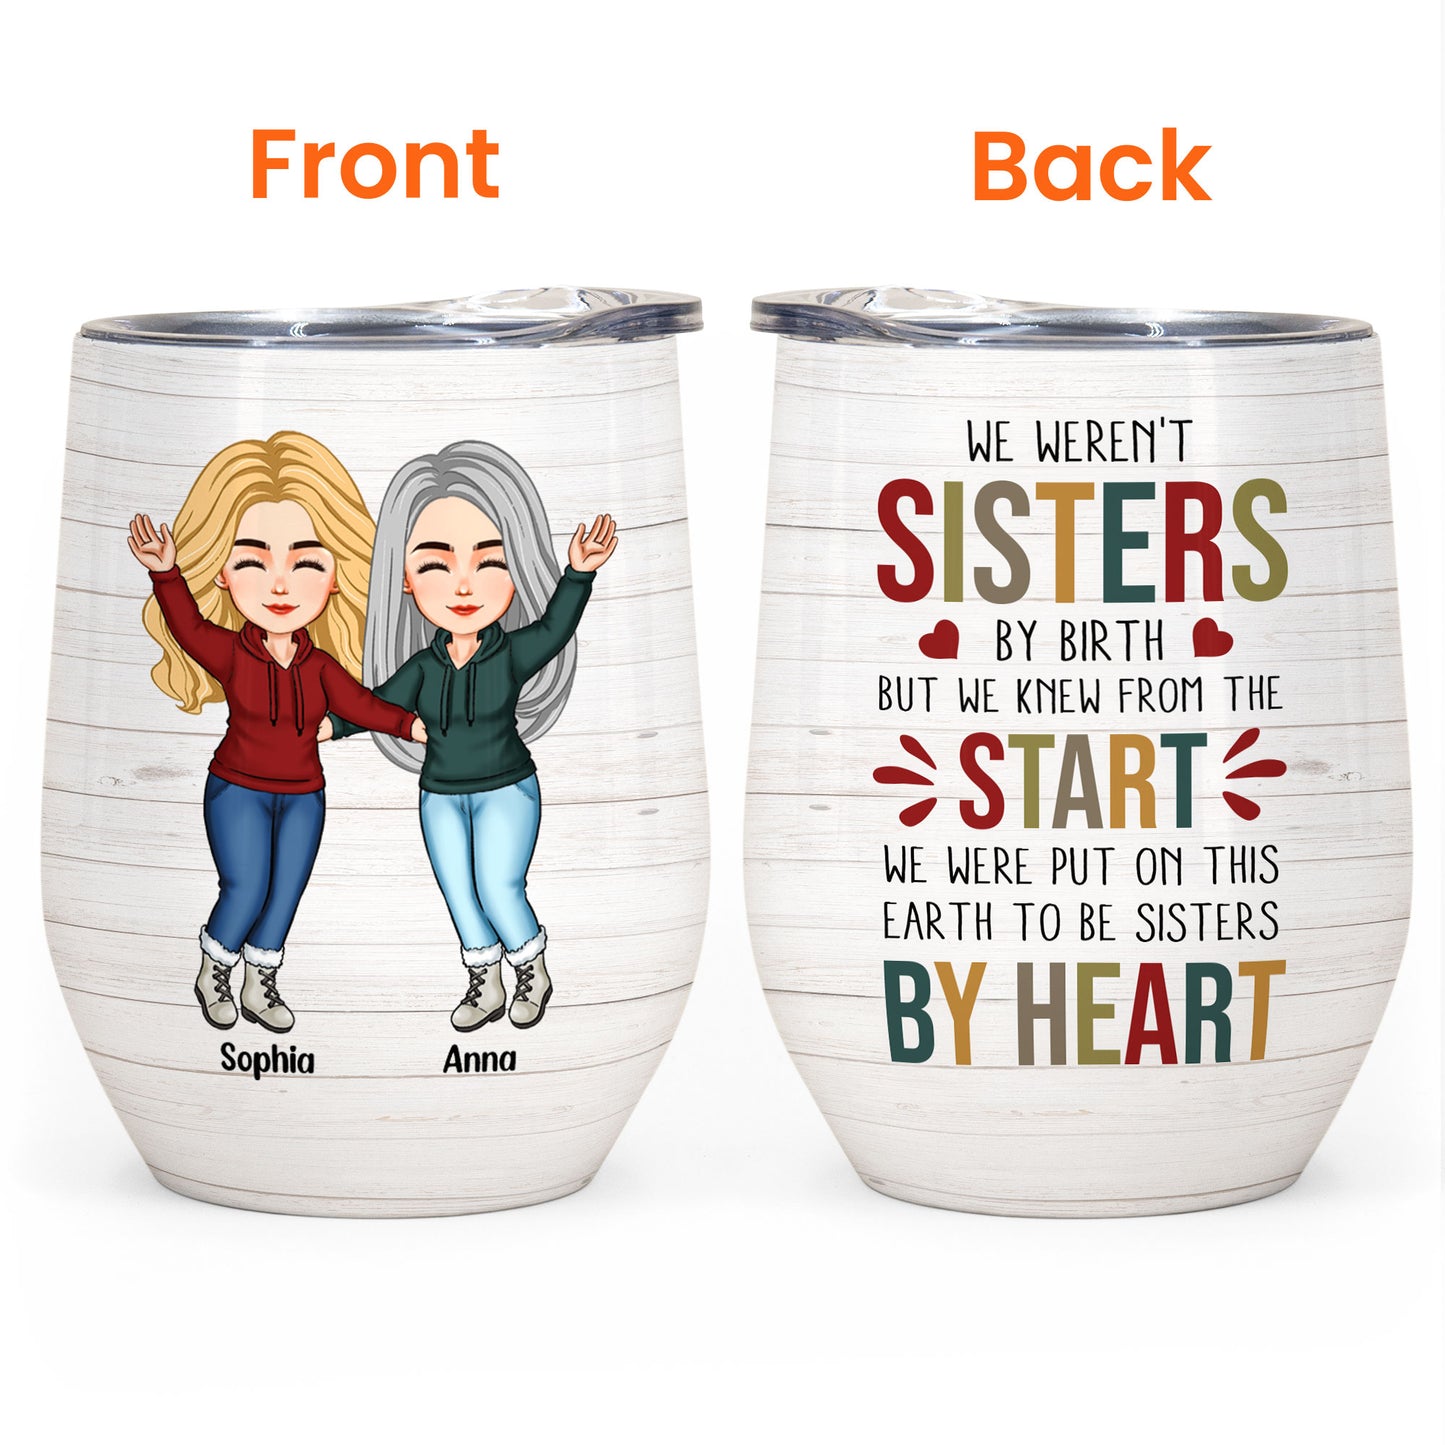 Sisters By Heart - Personalized Wine Tumbler - Birthday, Loving Gift For Sisters, Sistas, Besties, Soul Sisters